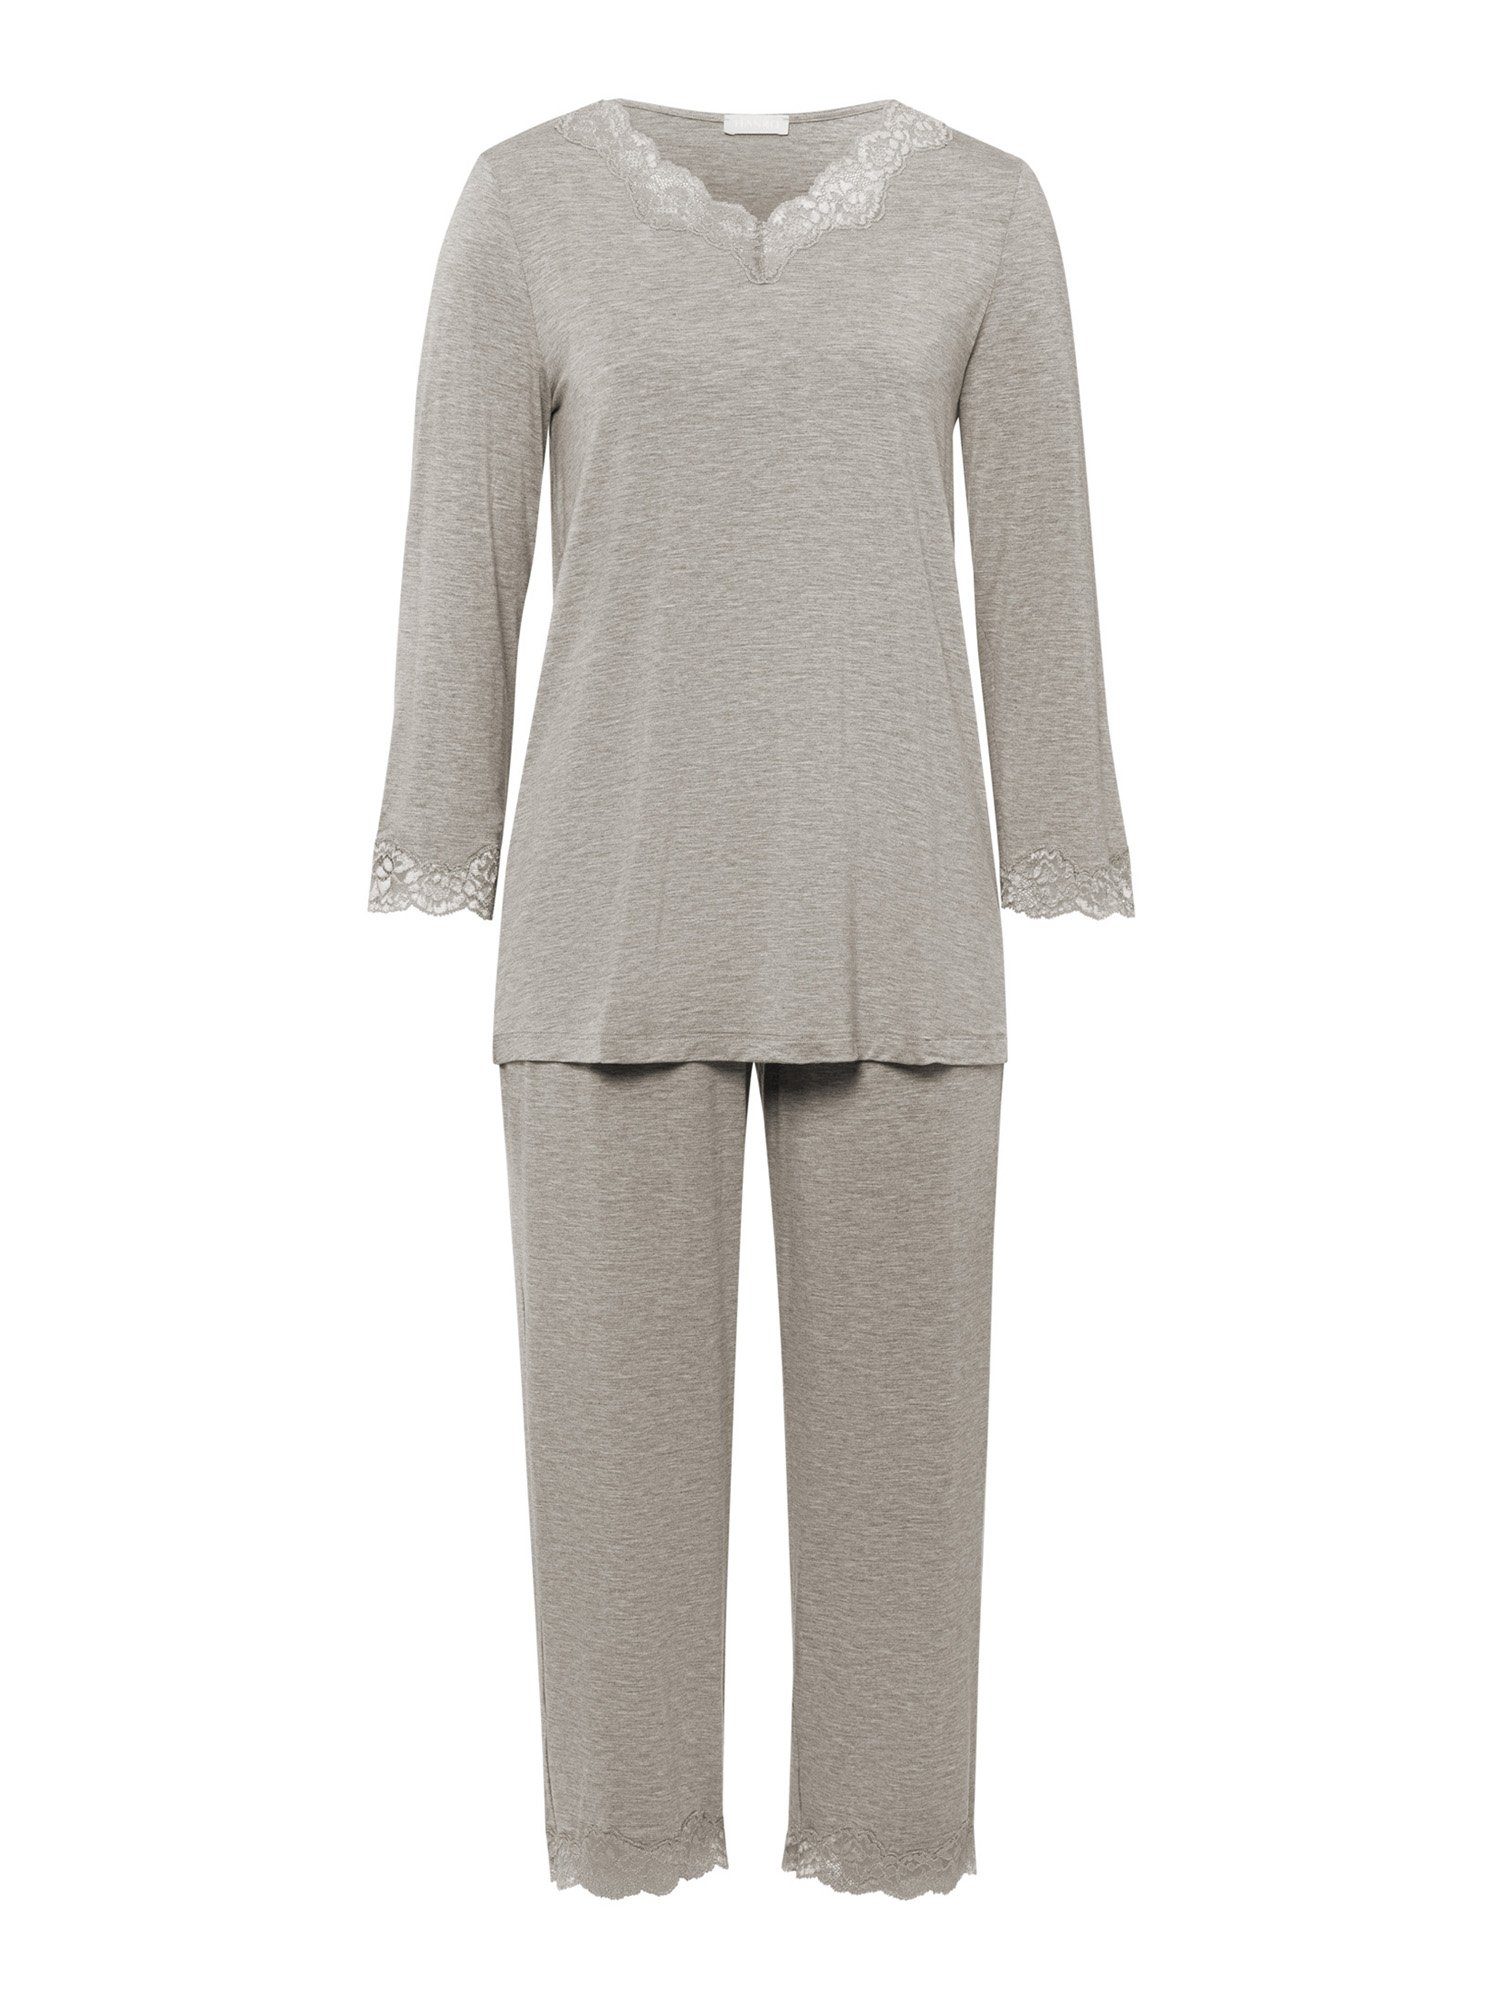 Hanro Pyjama Natural melange grey Elegance